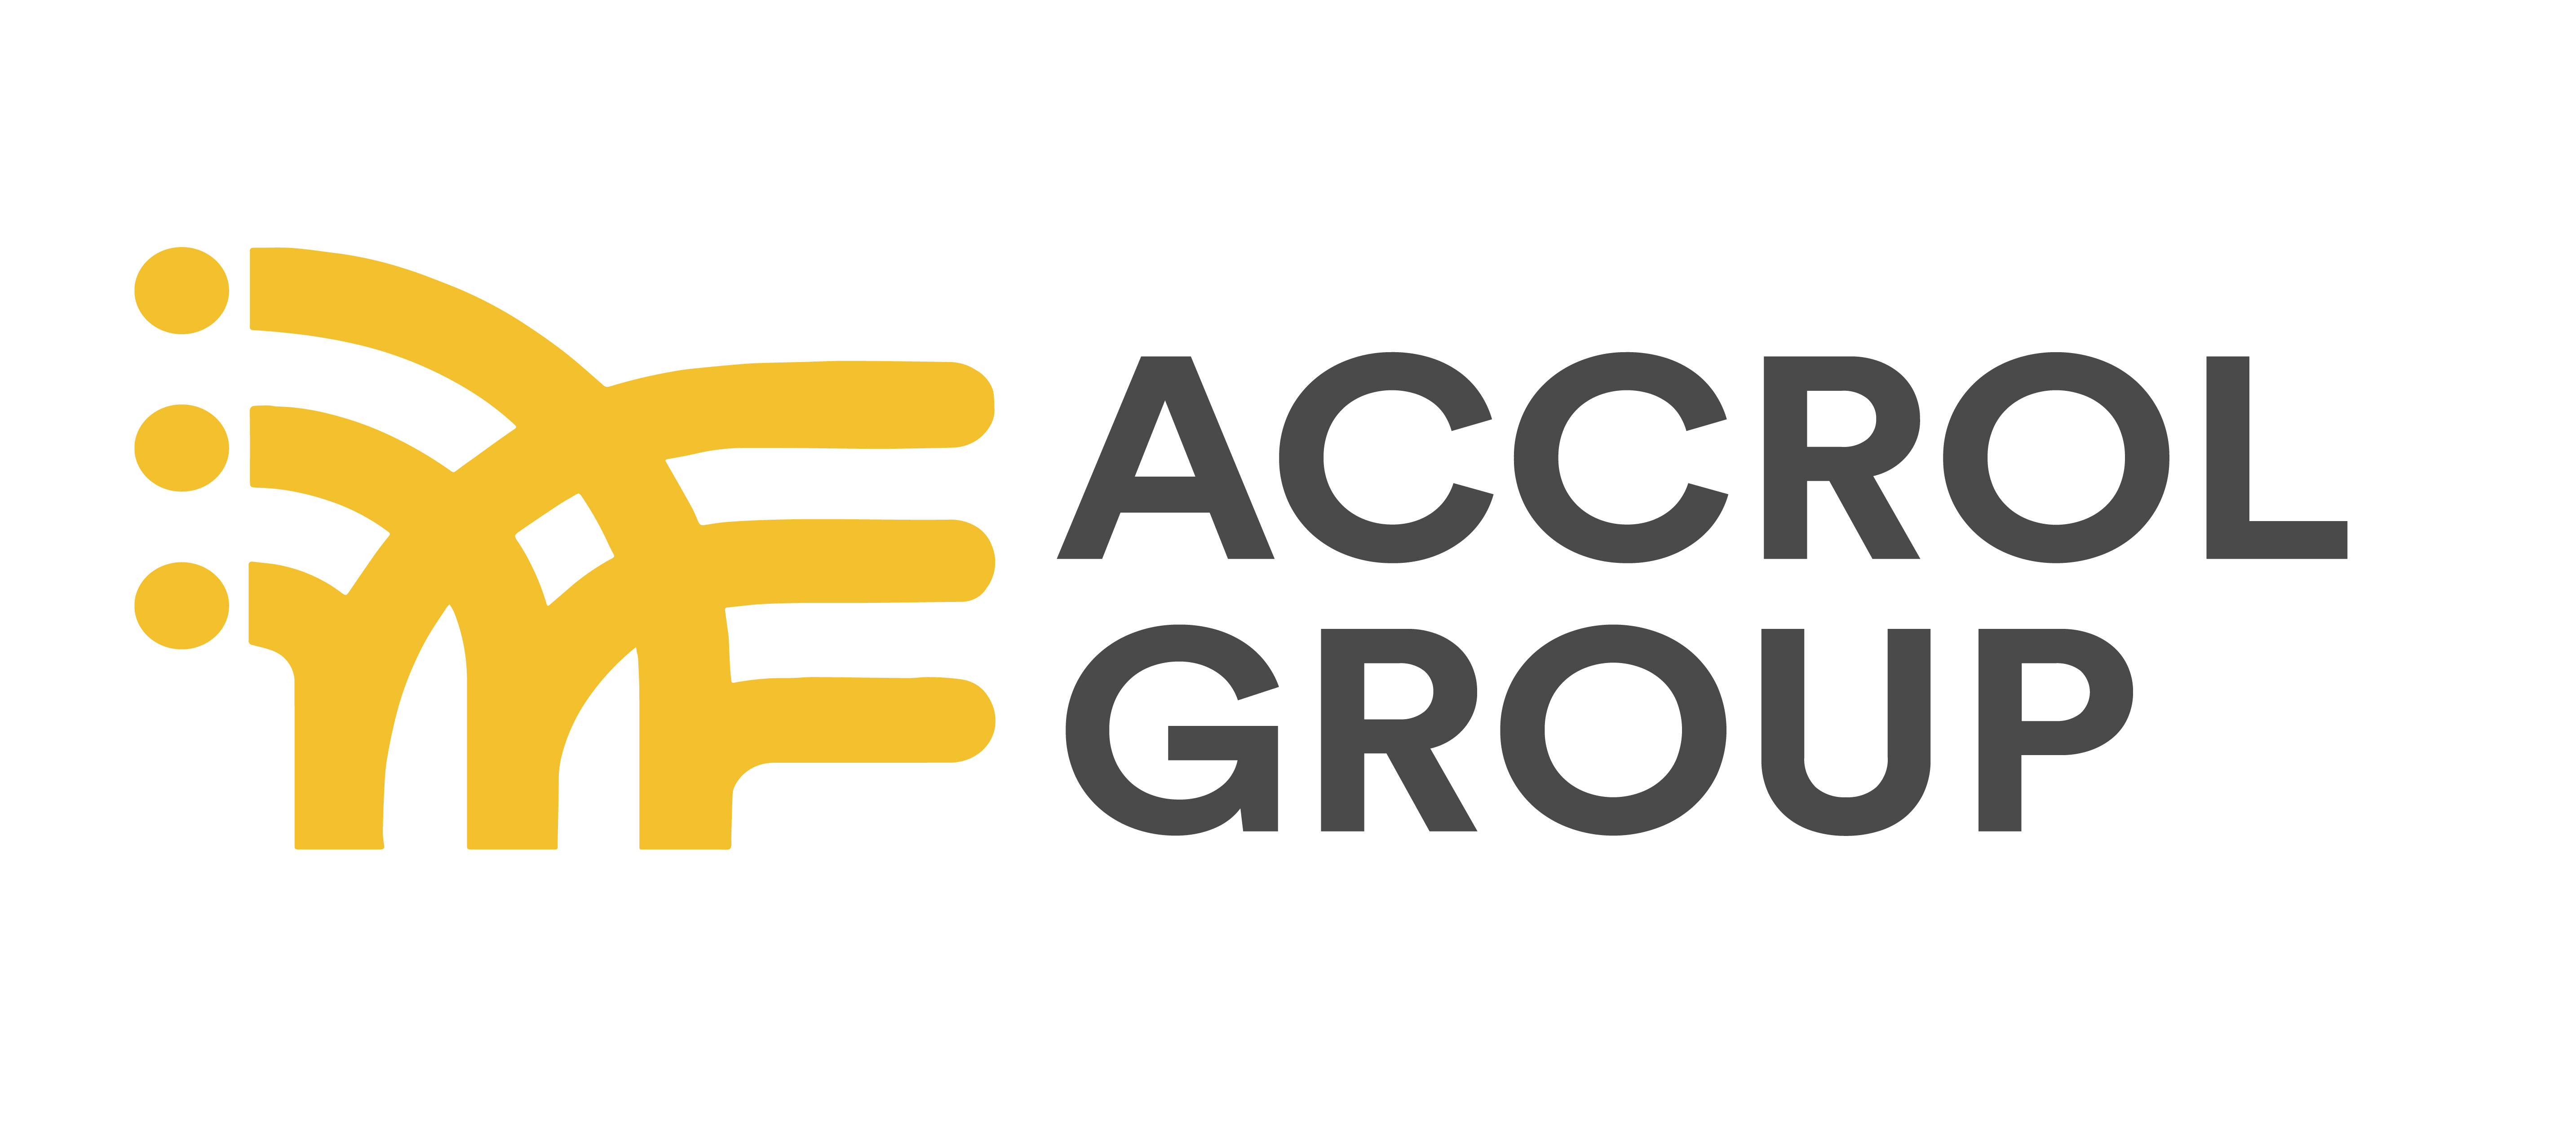 Accrol_logo.jpg